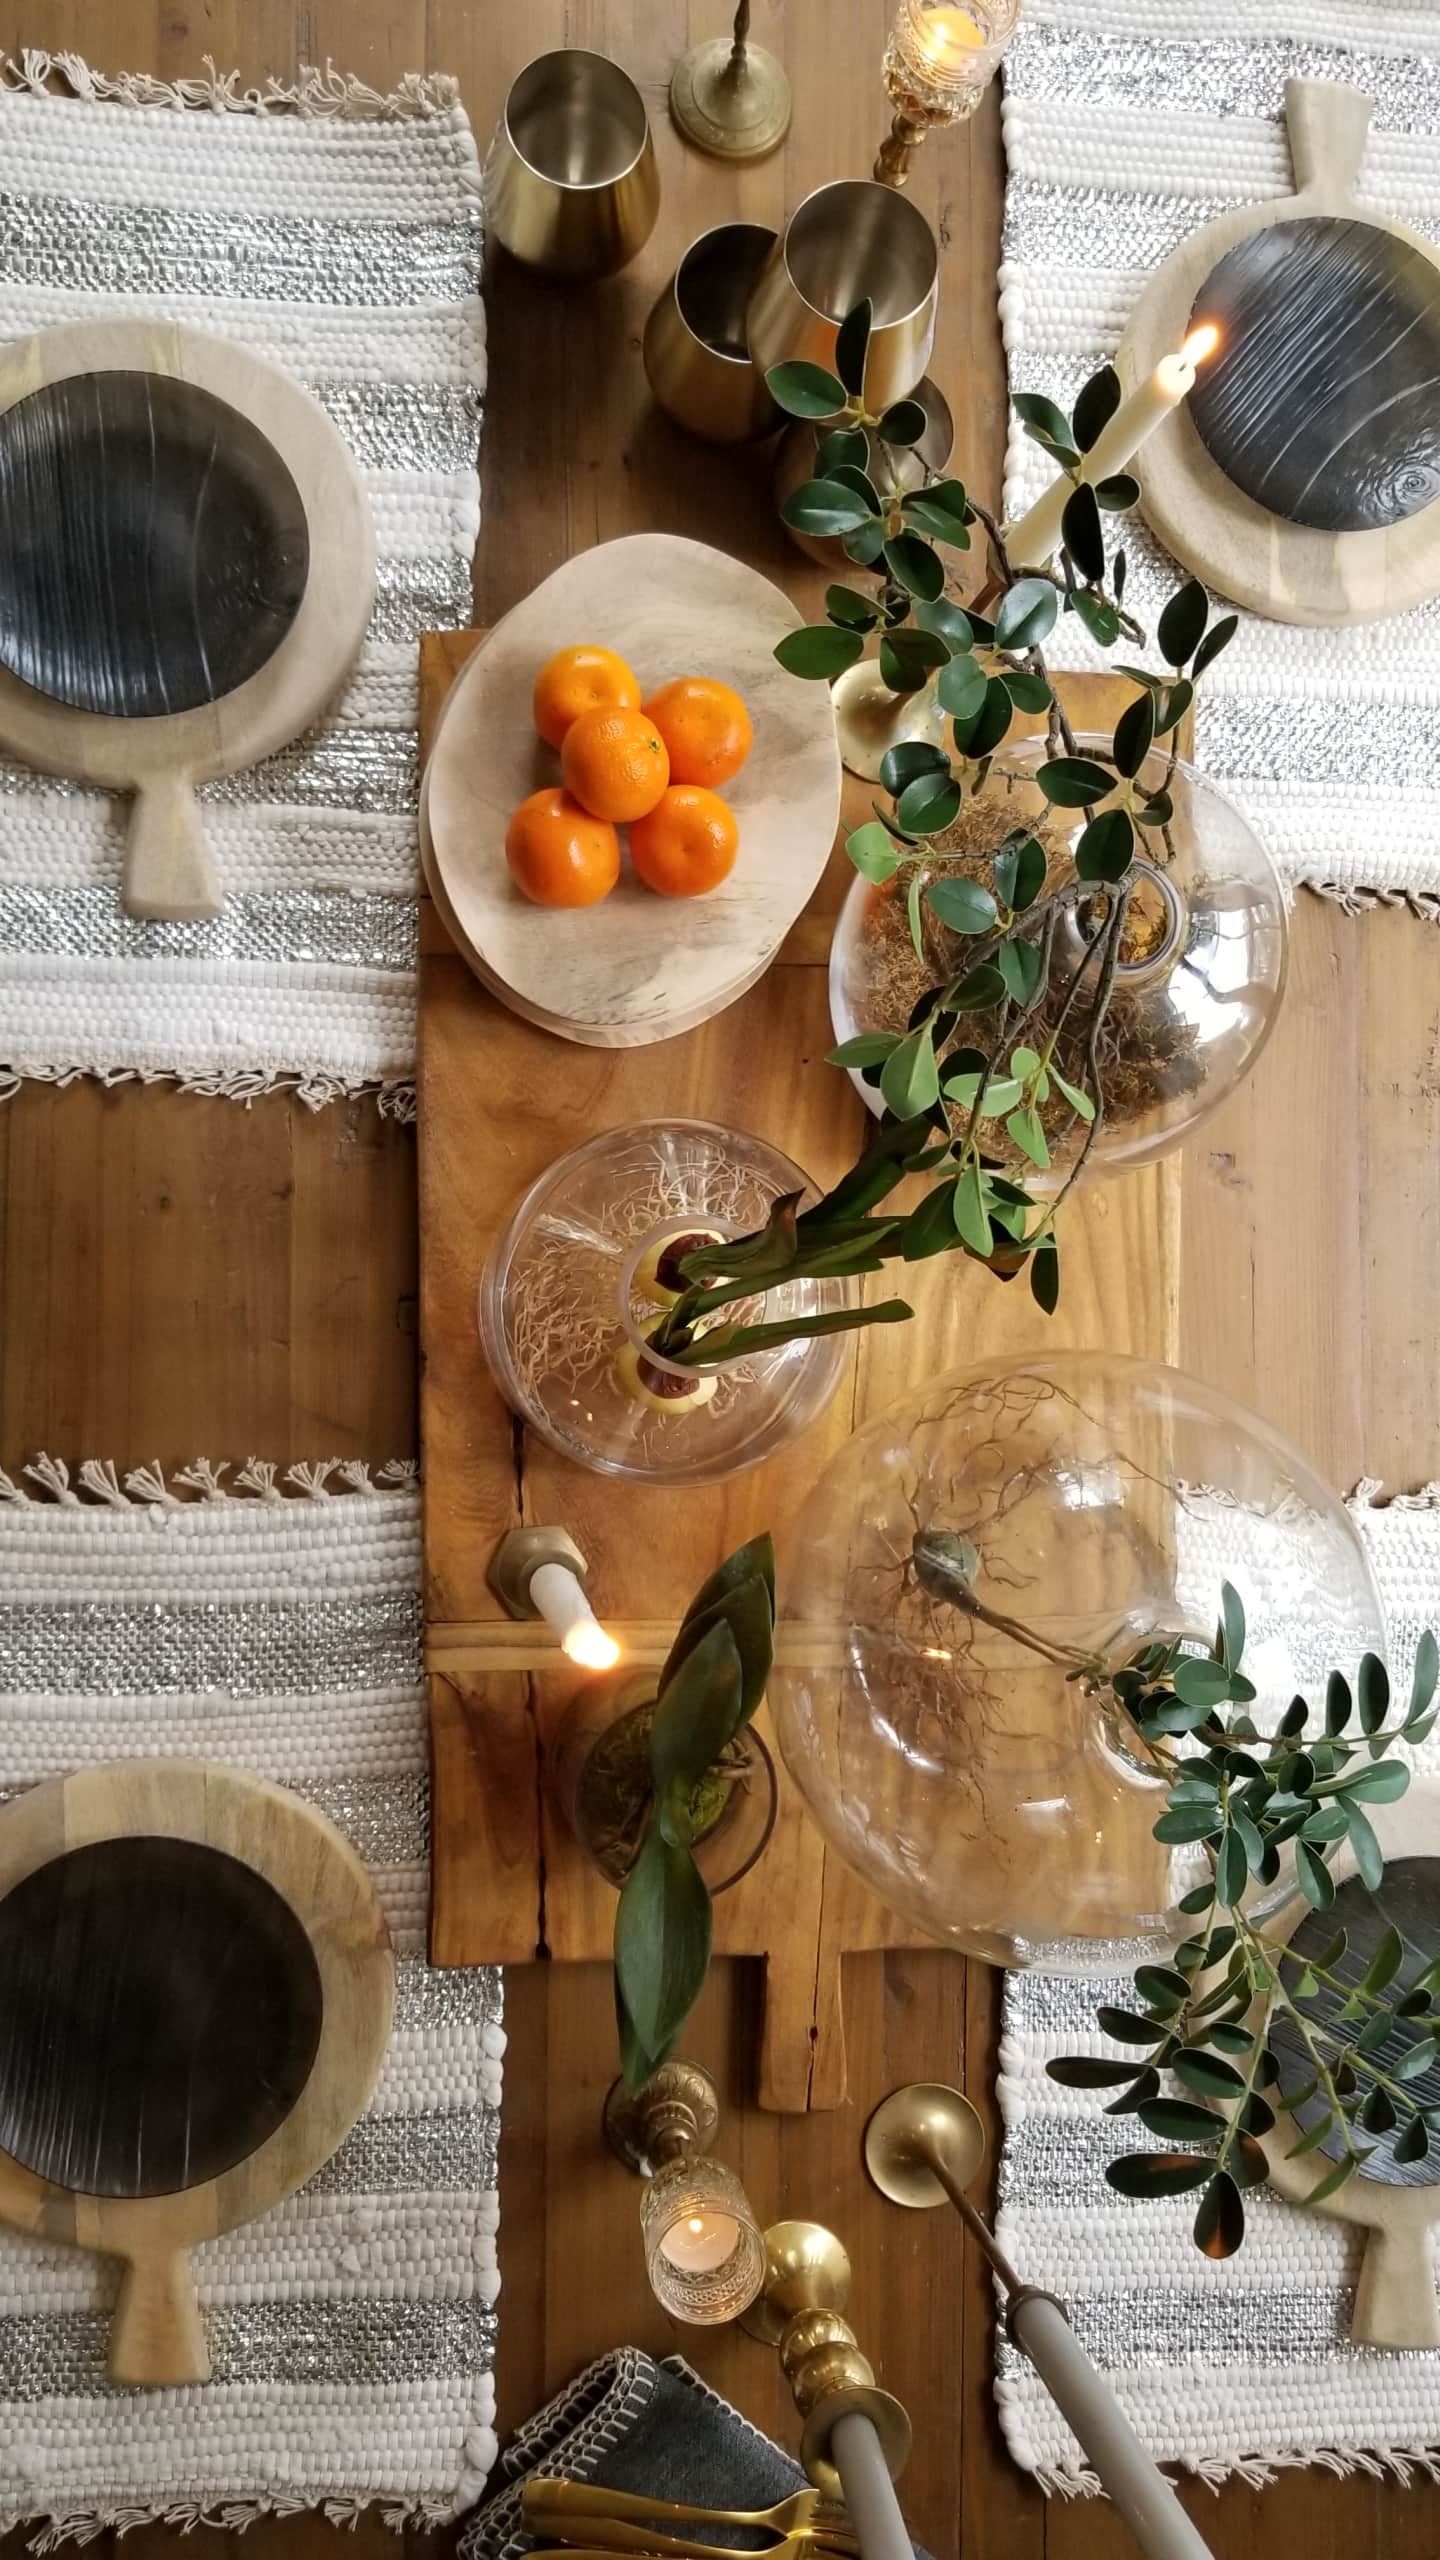 Hot New Decor Design Style 2019 Farmhouse Table Wood Glass Mixed Metals Candles Plants Scandinavian Boho Urban Chic Modern 